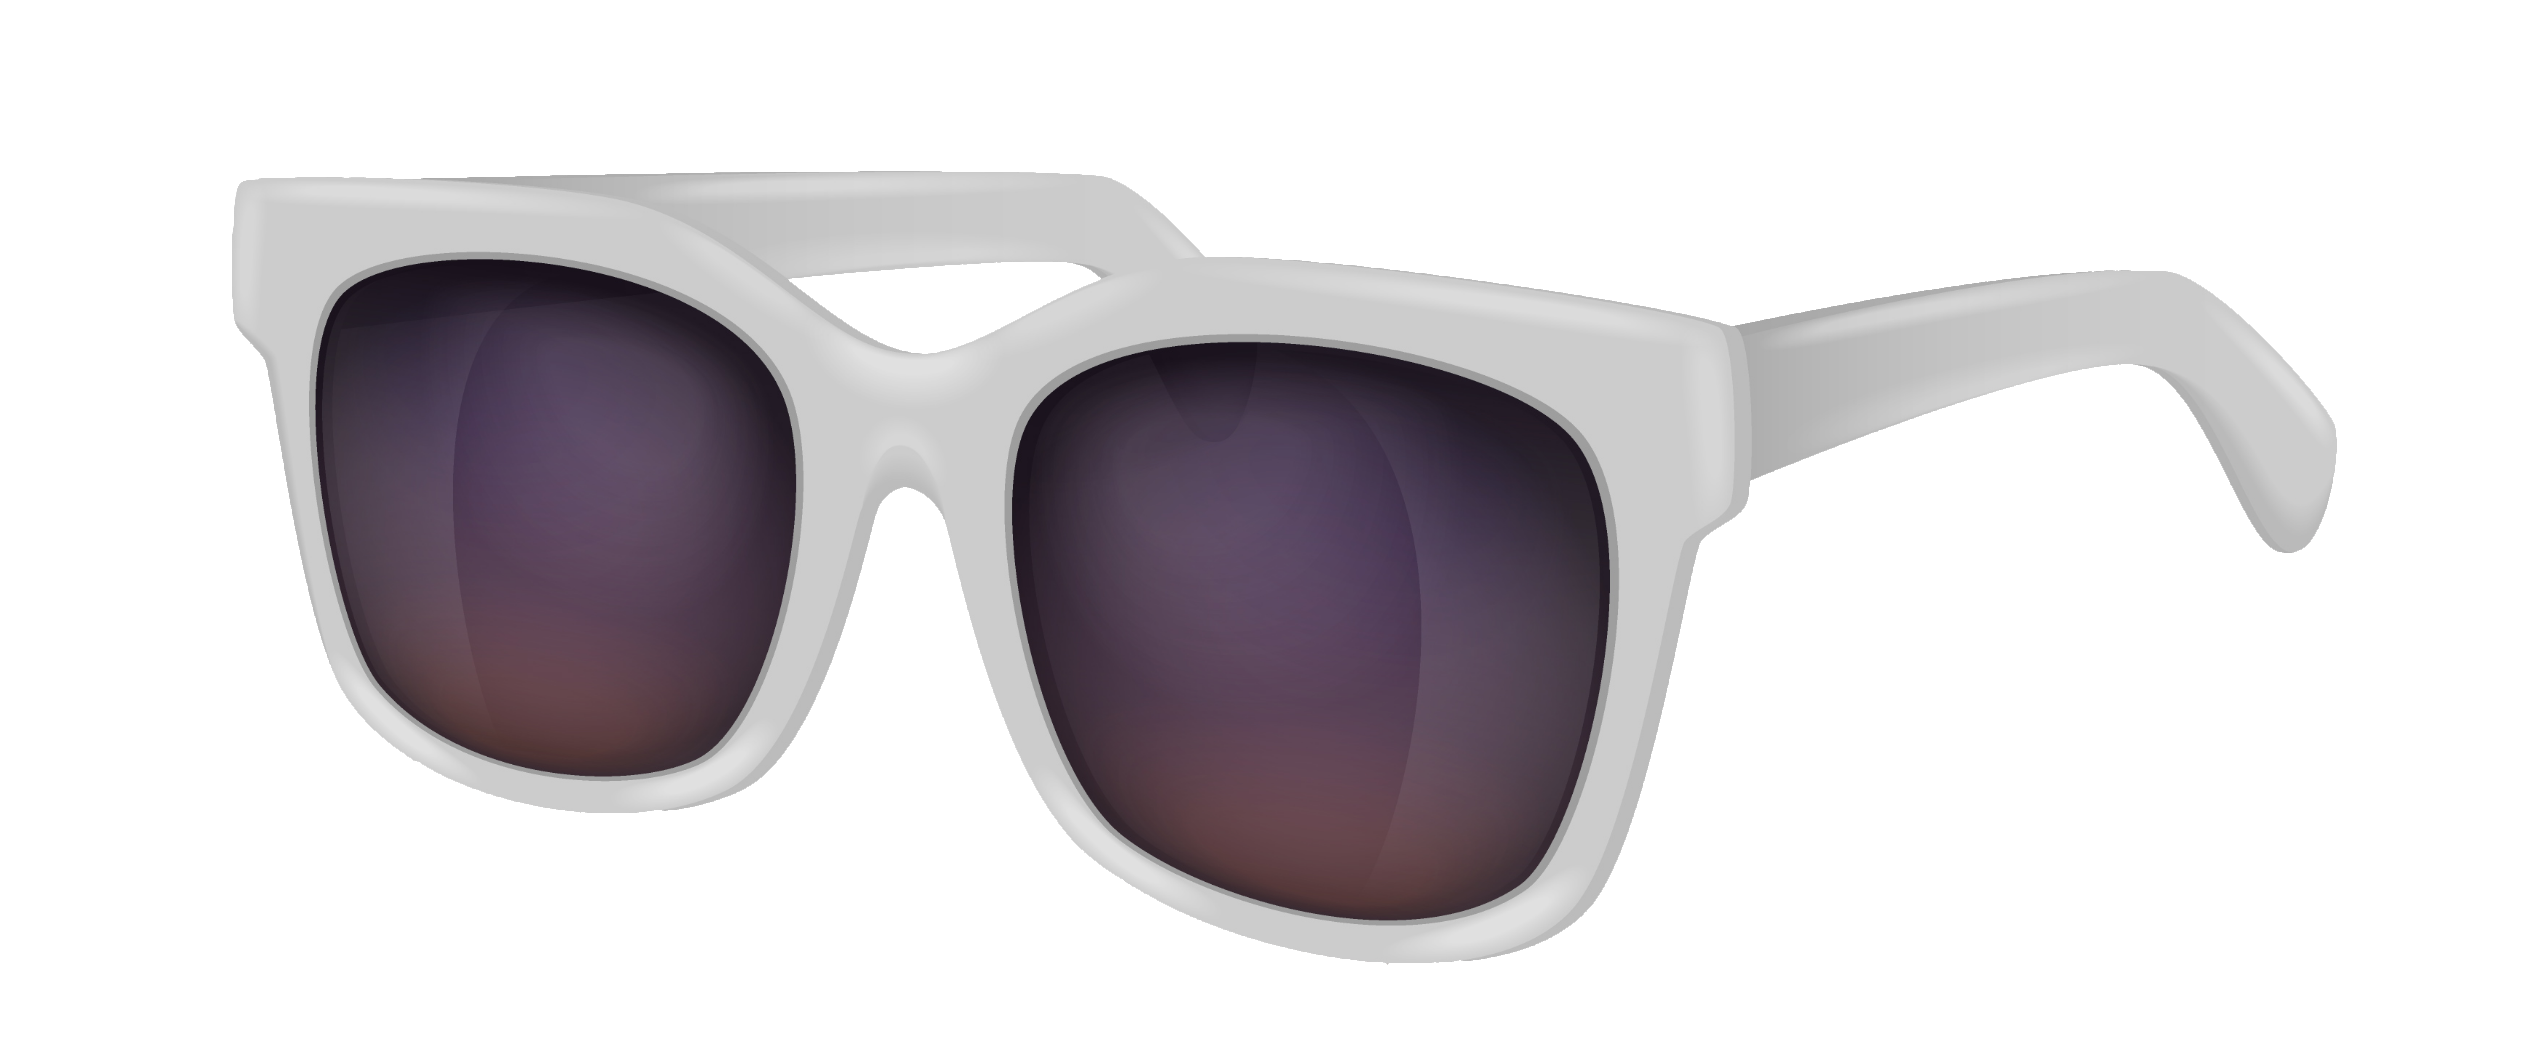 sunglasses-37